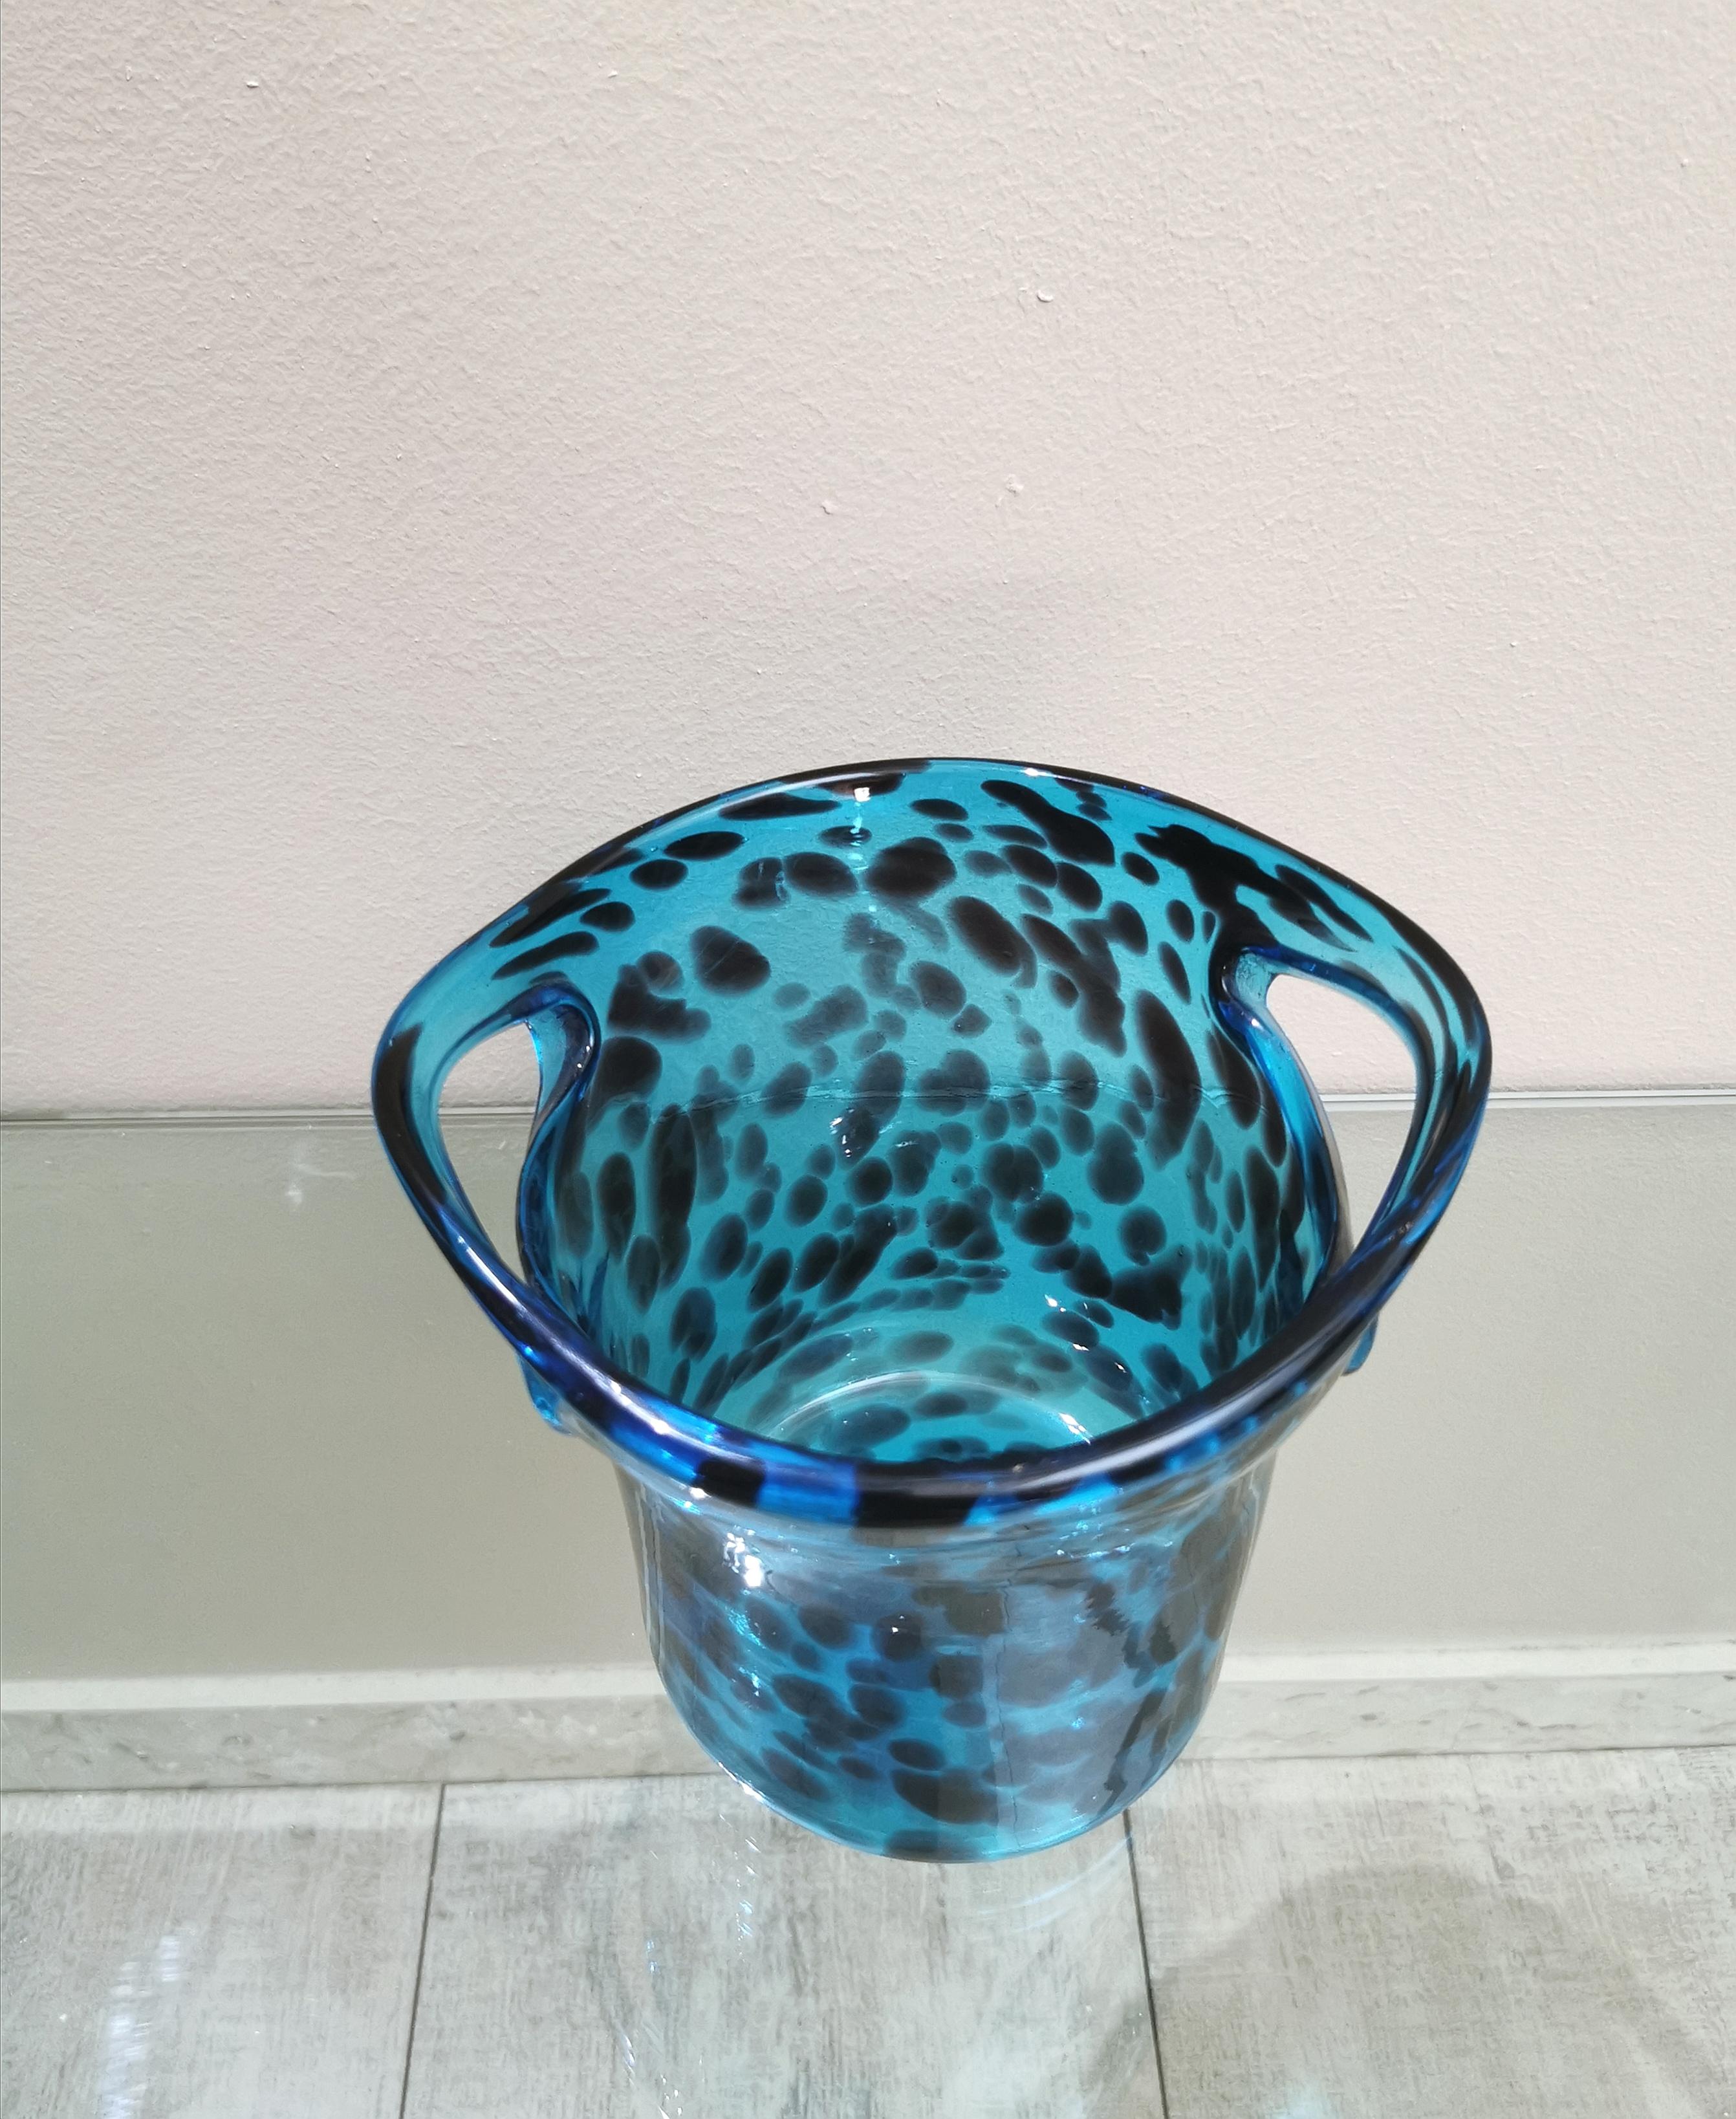 20th Century Vase Murano Glass Black Blue Decorative Object Midcentury Italian Design 1960s For Sale